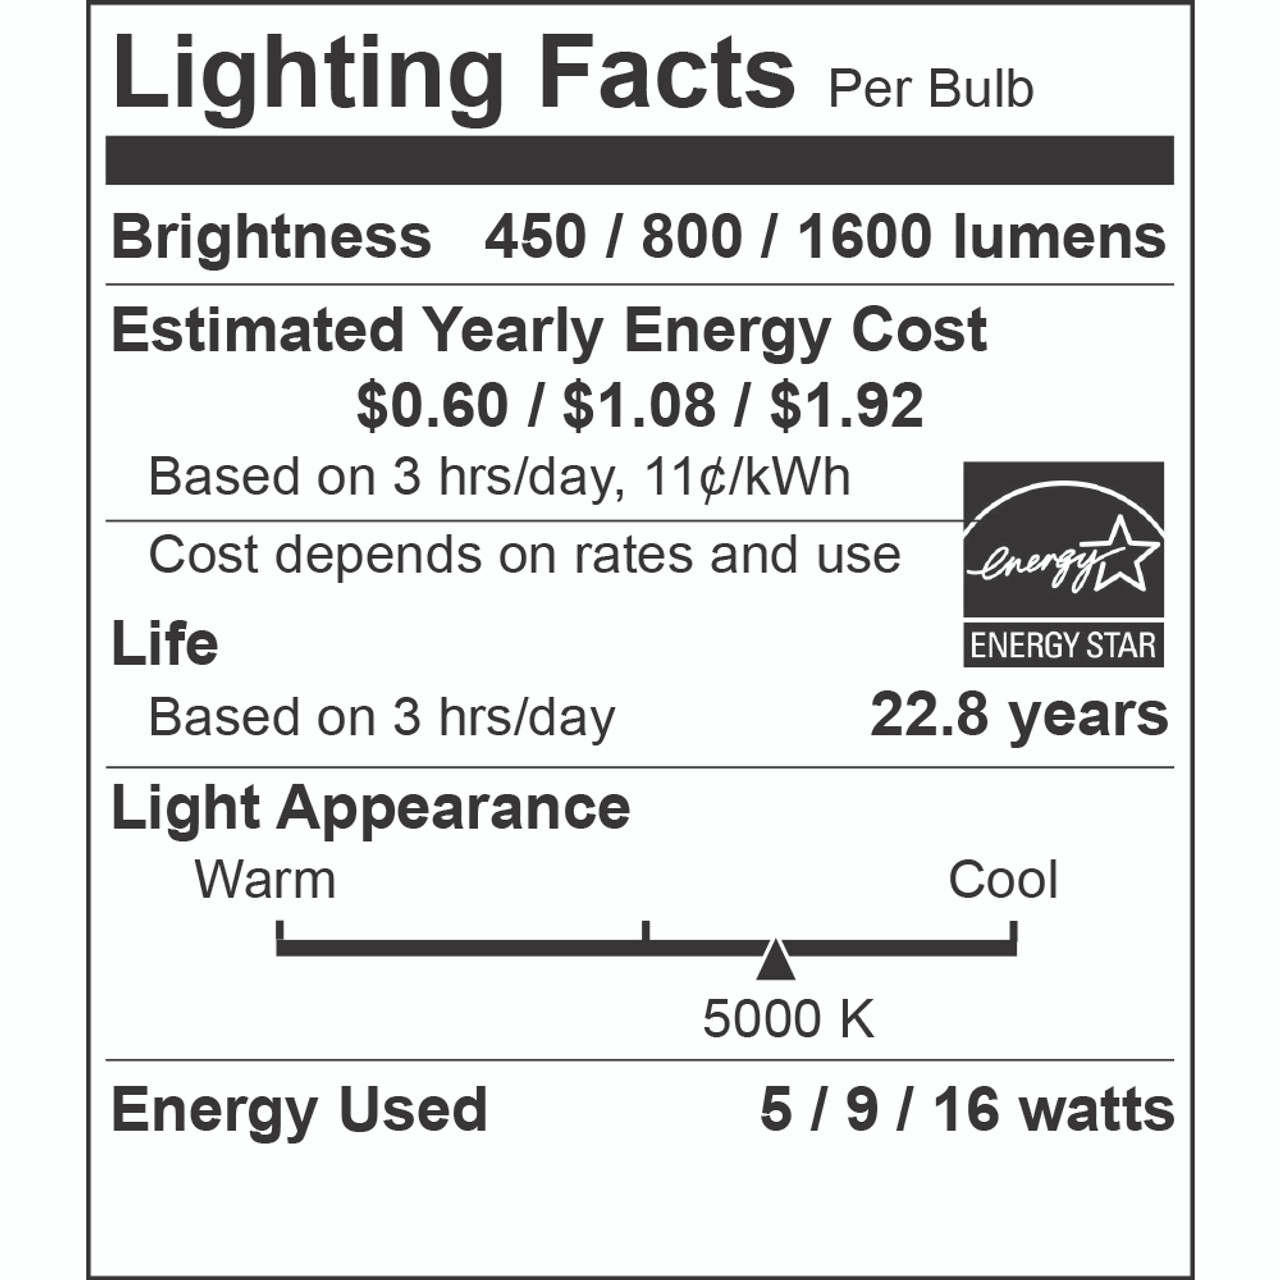 Lighting Facts